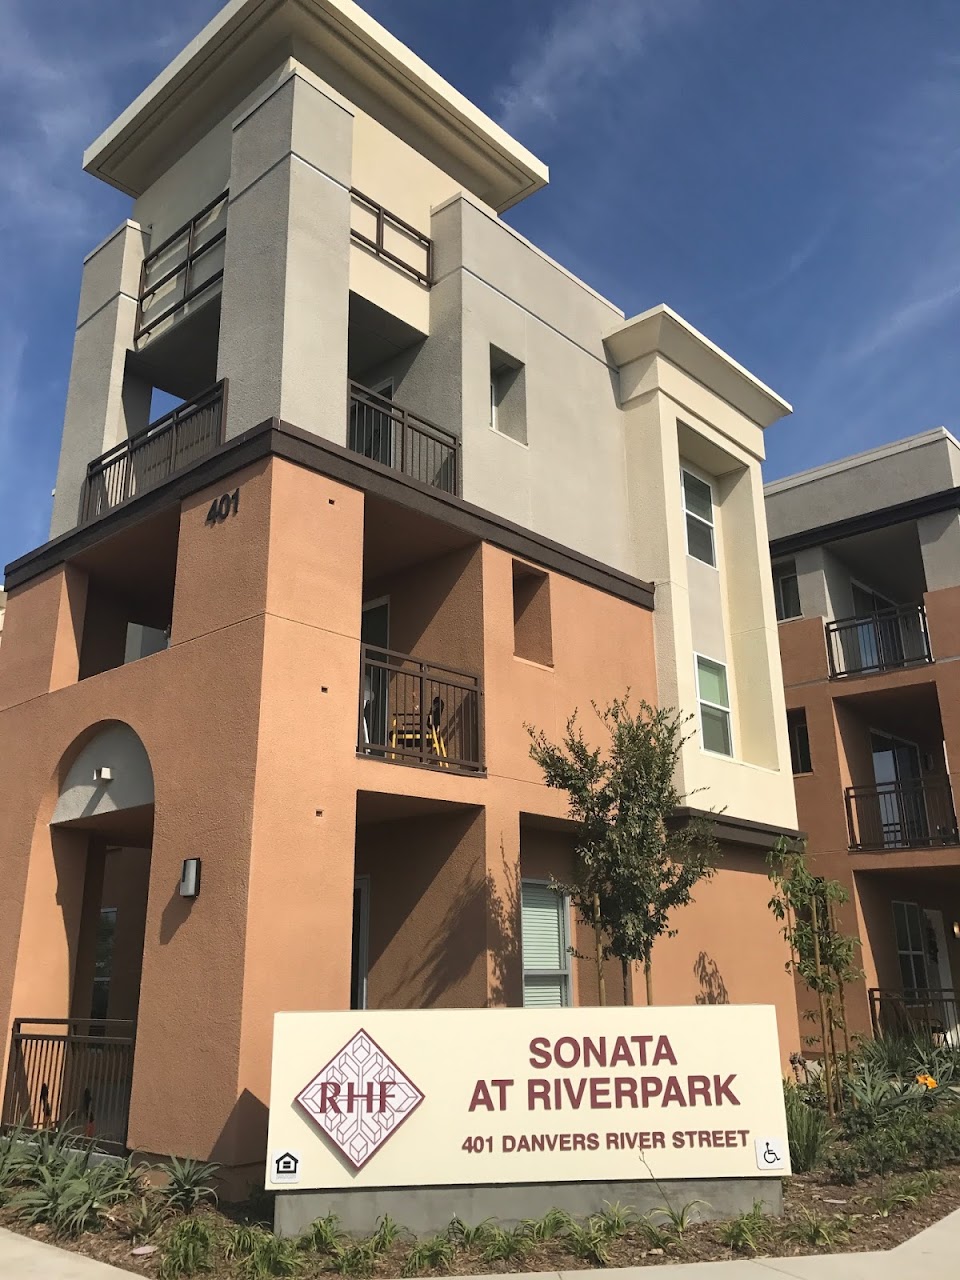 Photo of SONATA AT RIVERPARK. Affordable housing located at 401 DANVERS RIVER STREET OXNARD, CA 93036